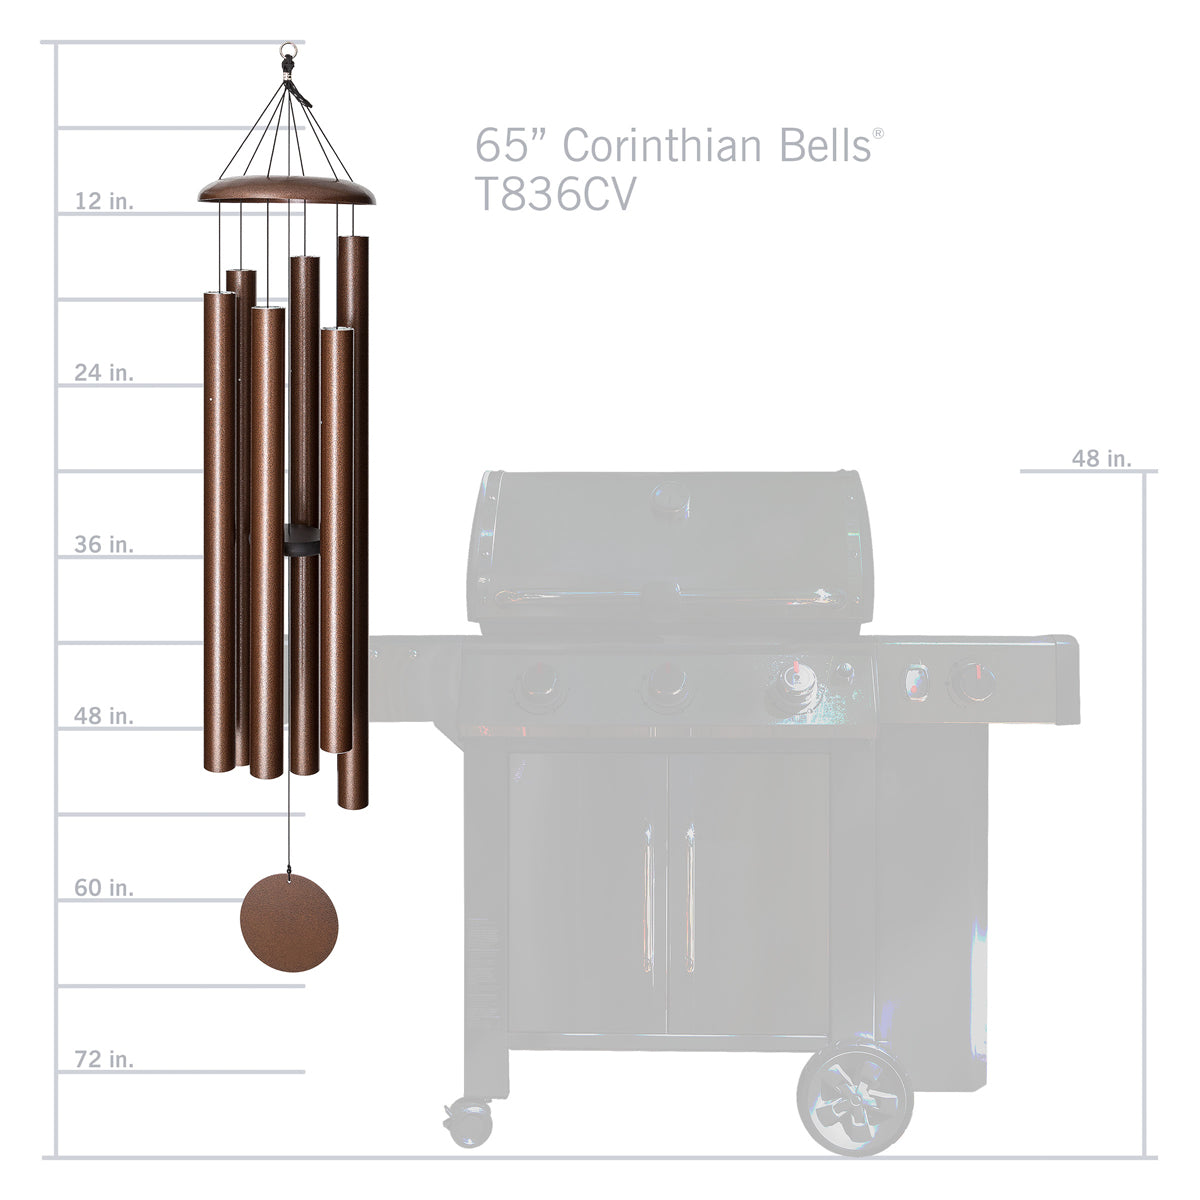 Corinthian Bells 65-inch Wind Chime - Copper Vein